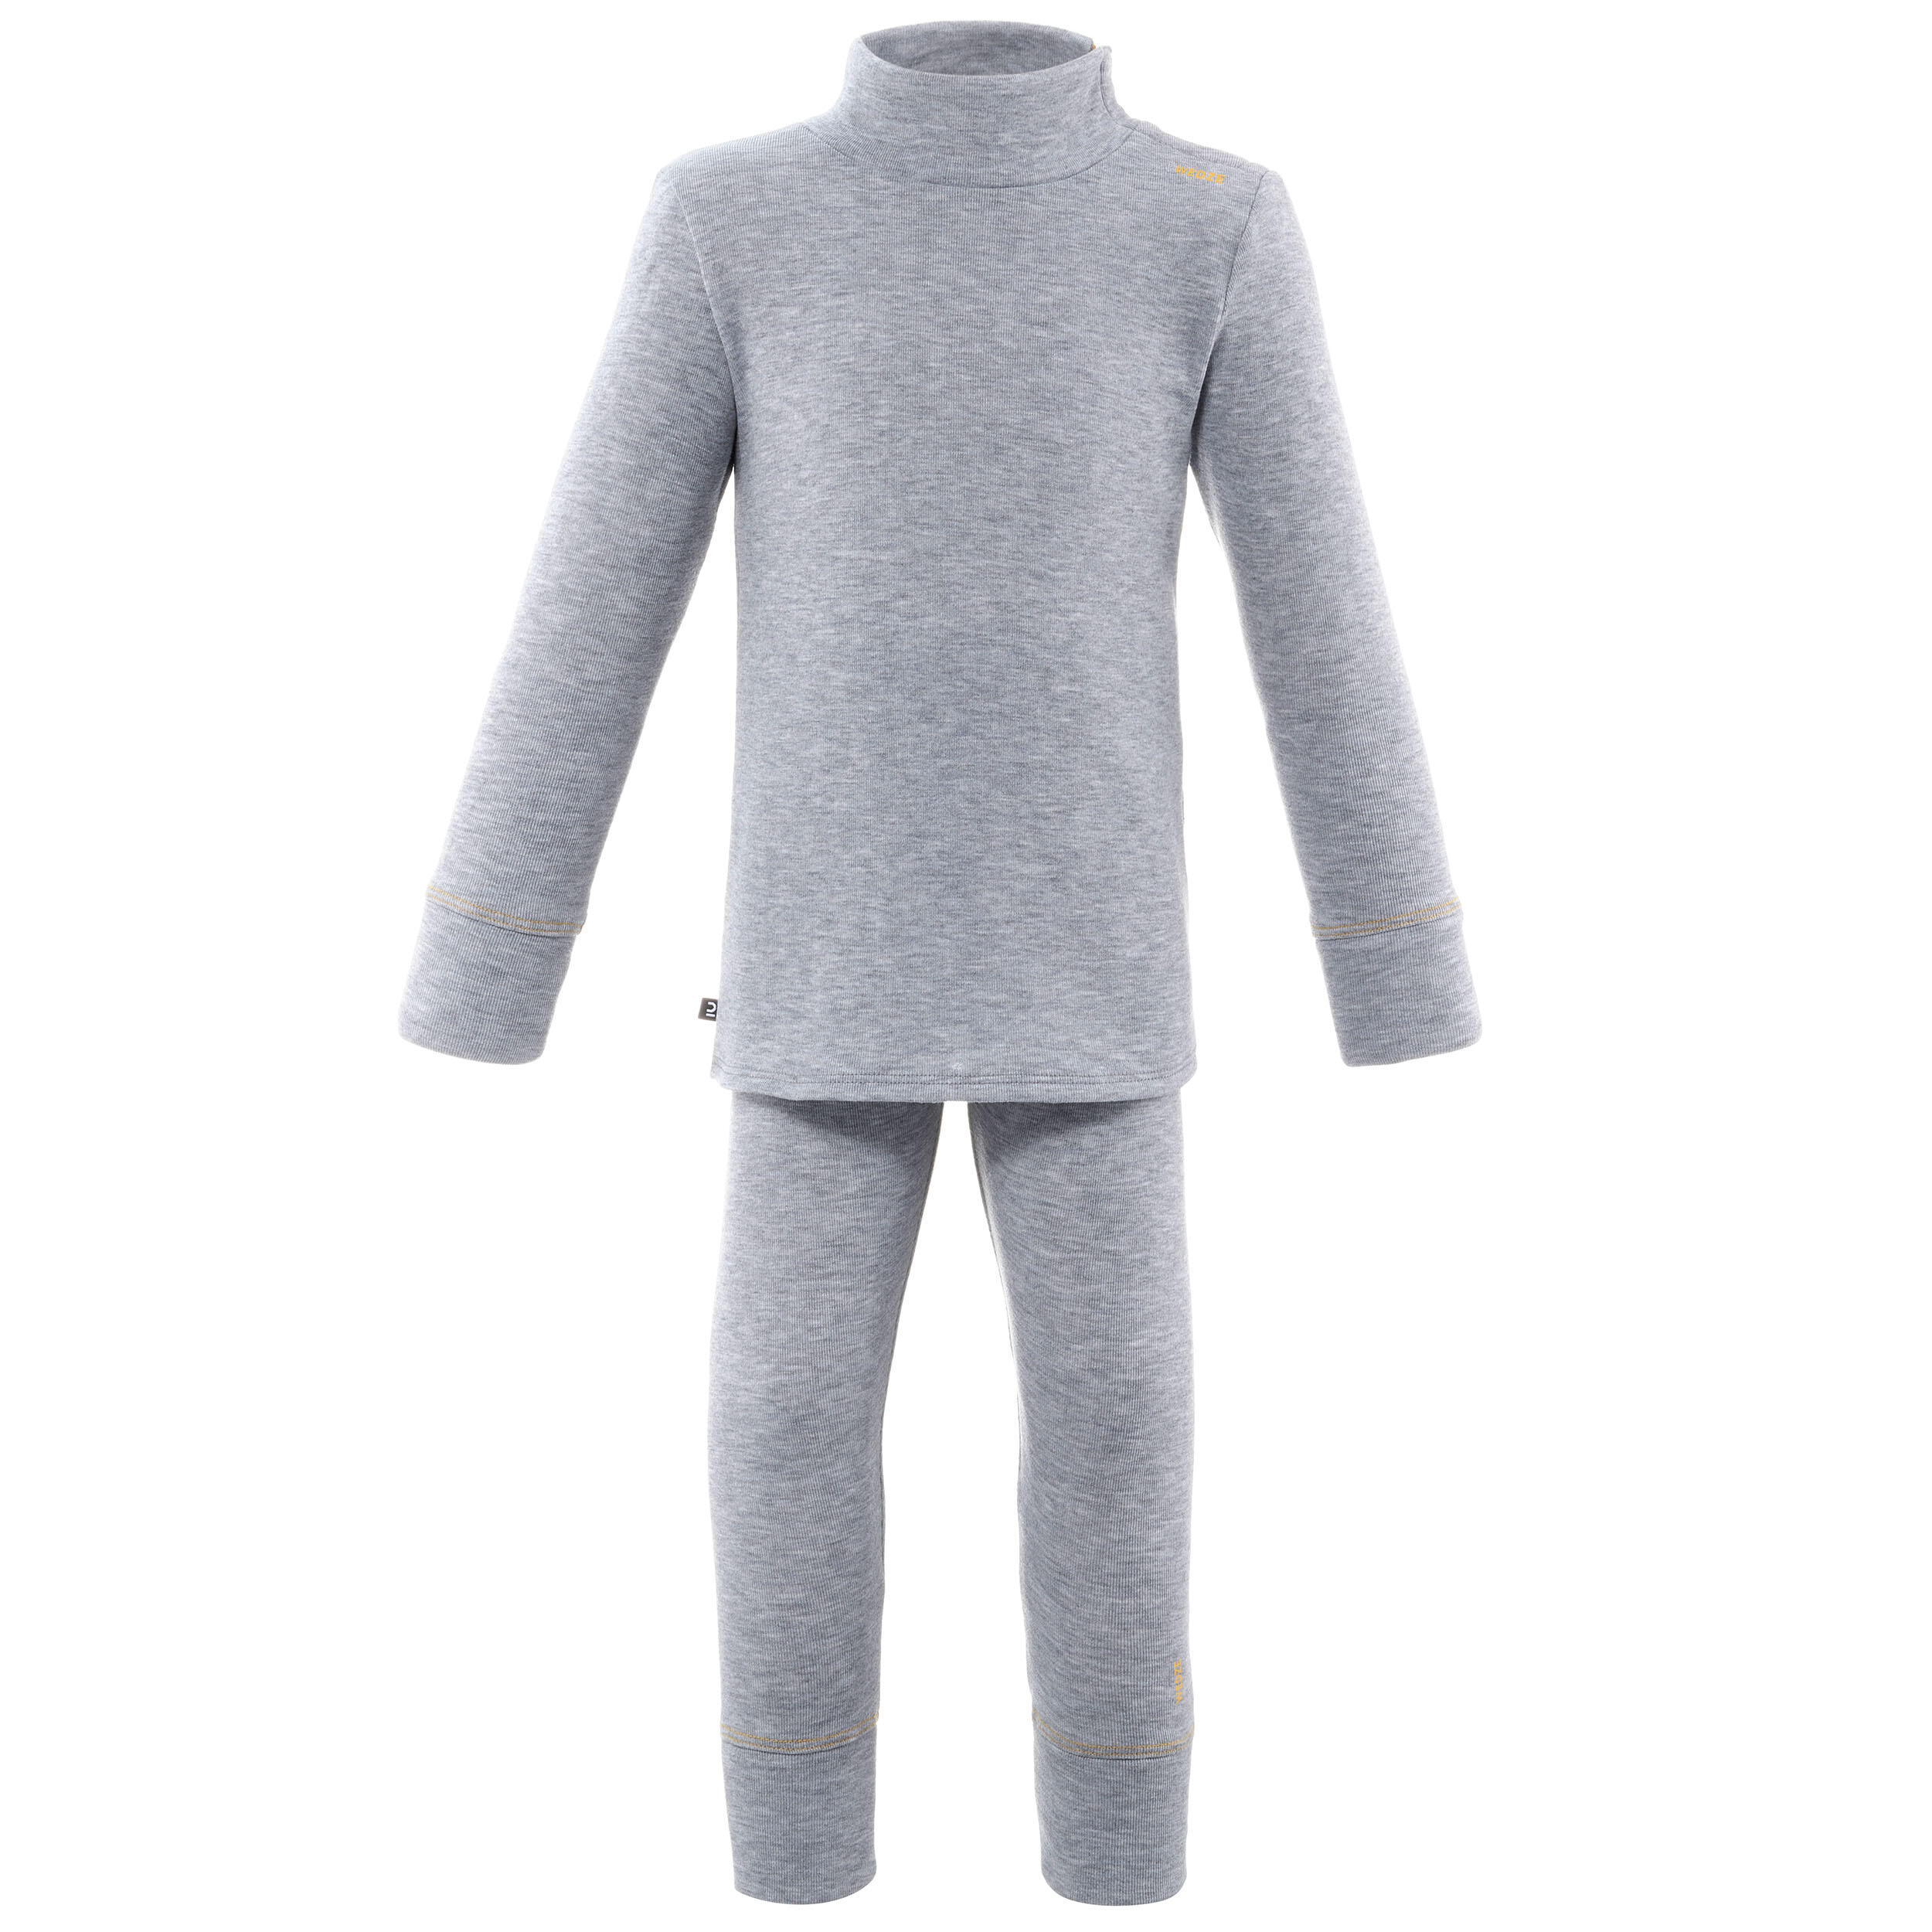 Base layer trousers, Baby ski leggings - WARM grey 9/10